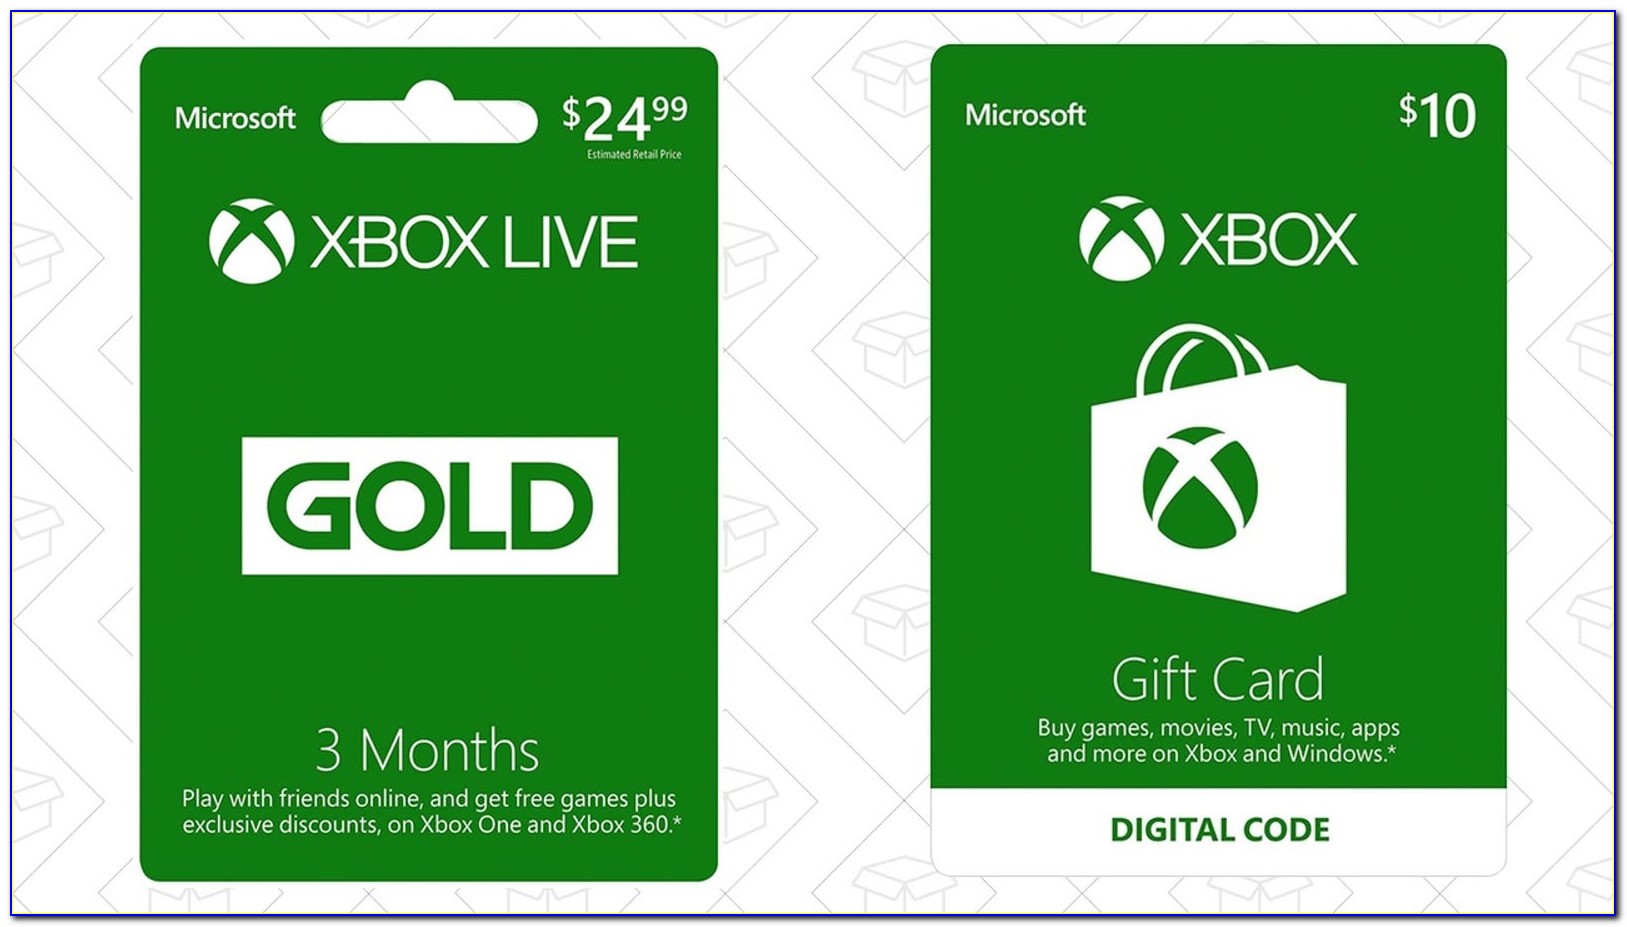 Xbox live gold цена. Xbox Gift Card. Xbox Live Gold. Microsoft Xbox Live Gold. Xbox Gift Card 10$.